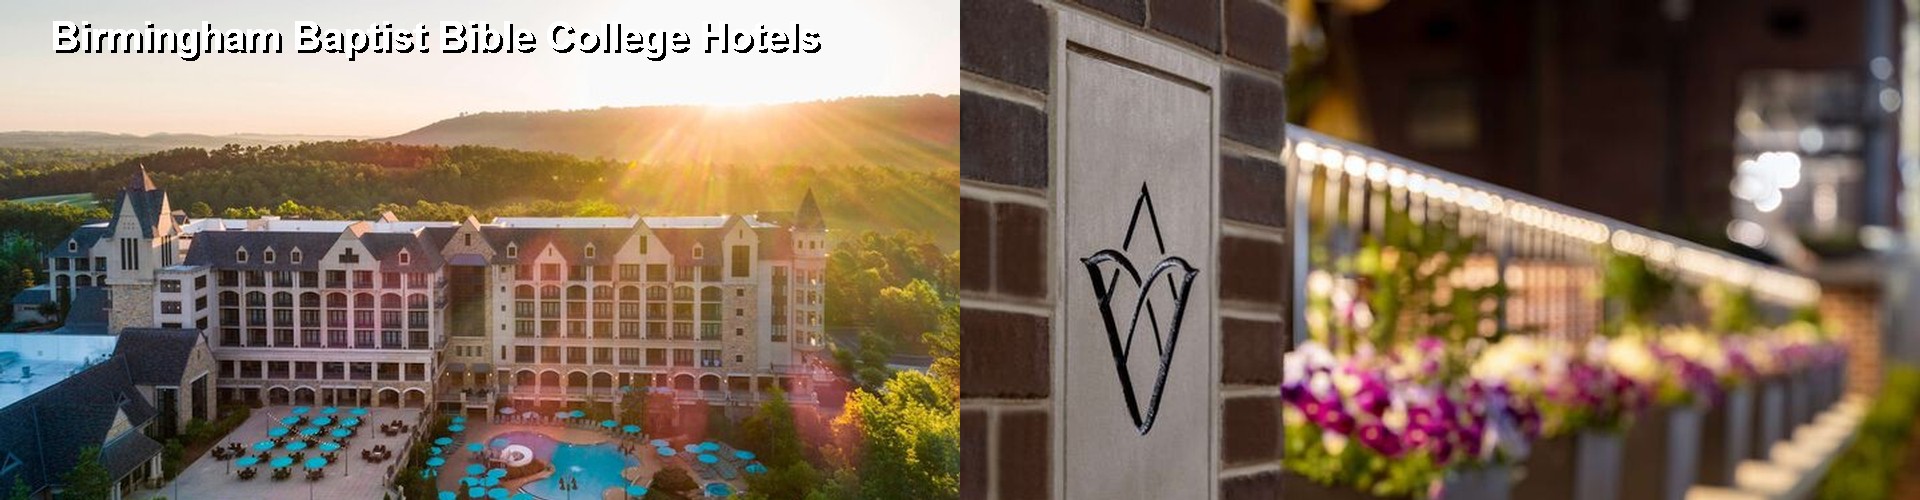 3 Best Hotels near Birmingham Baptist Bible College